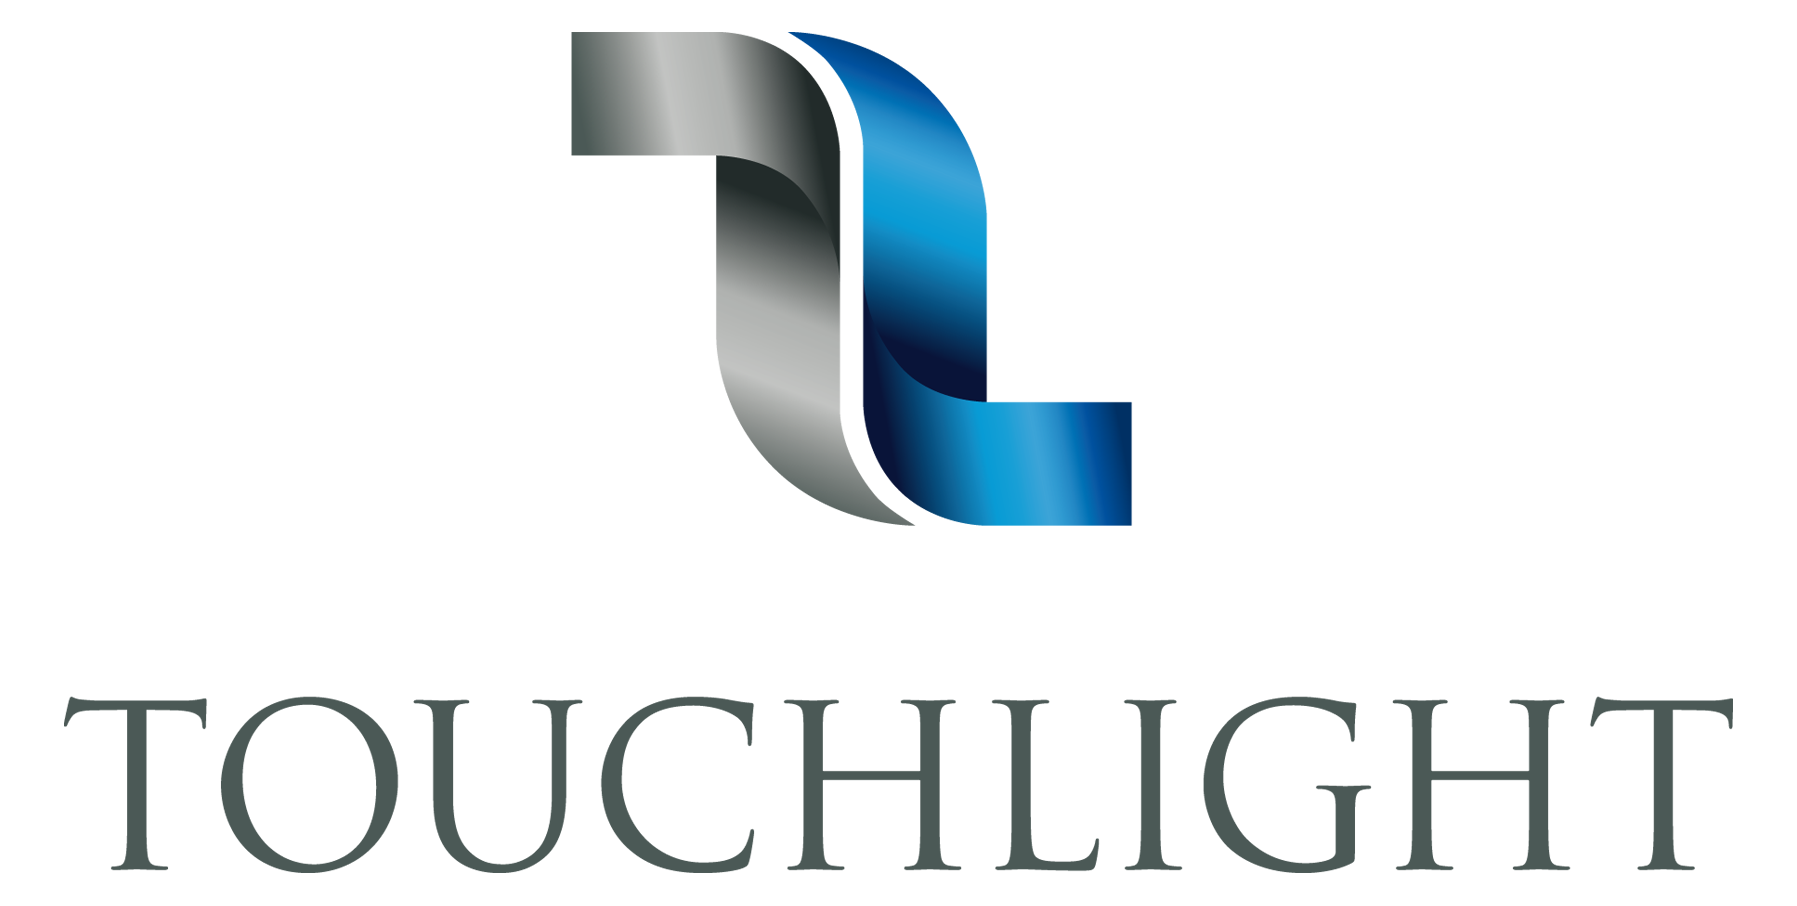 Touchlight logo